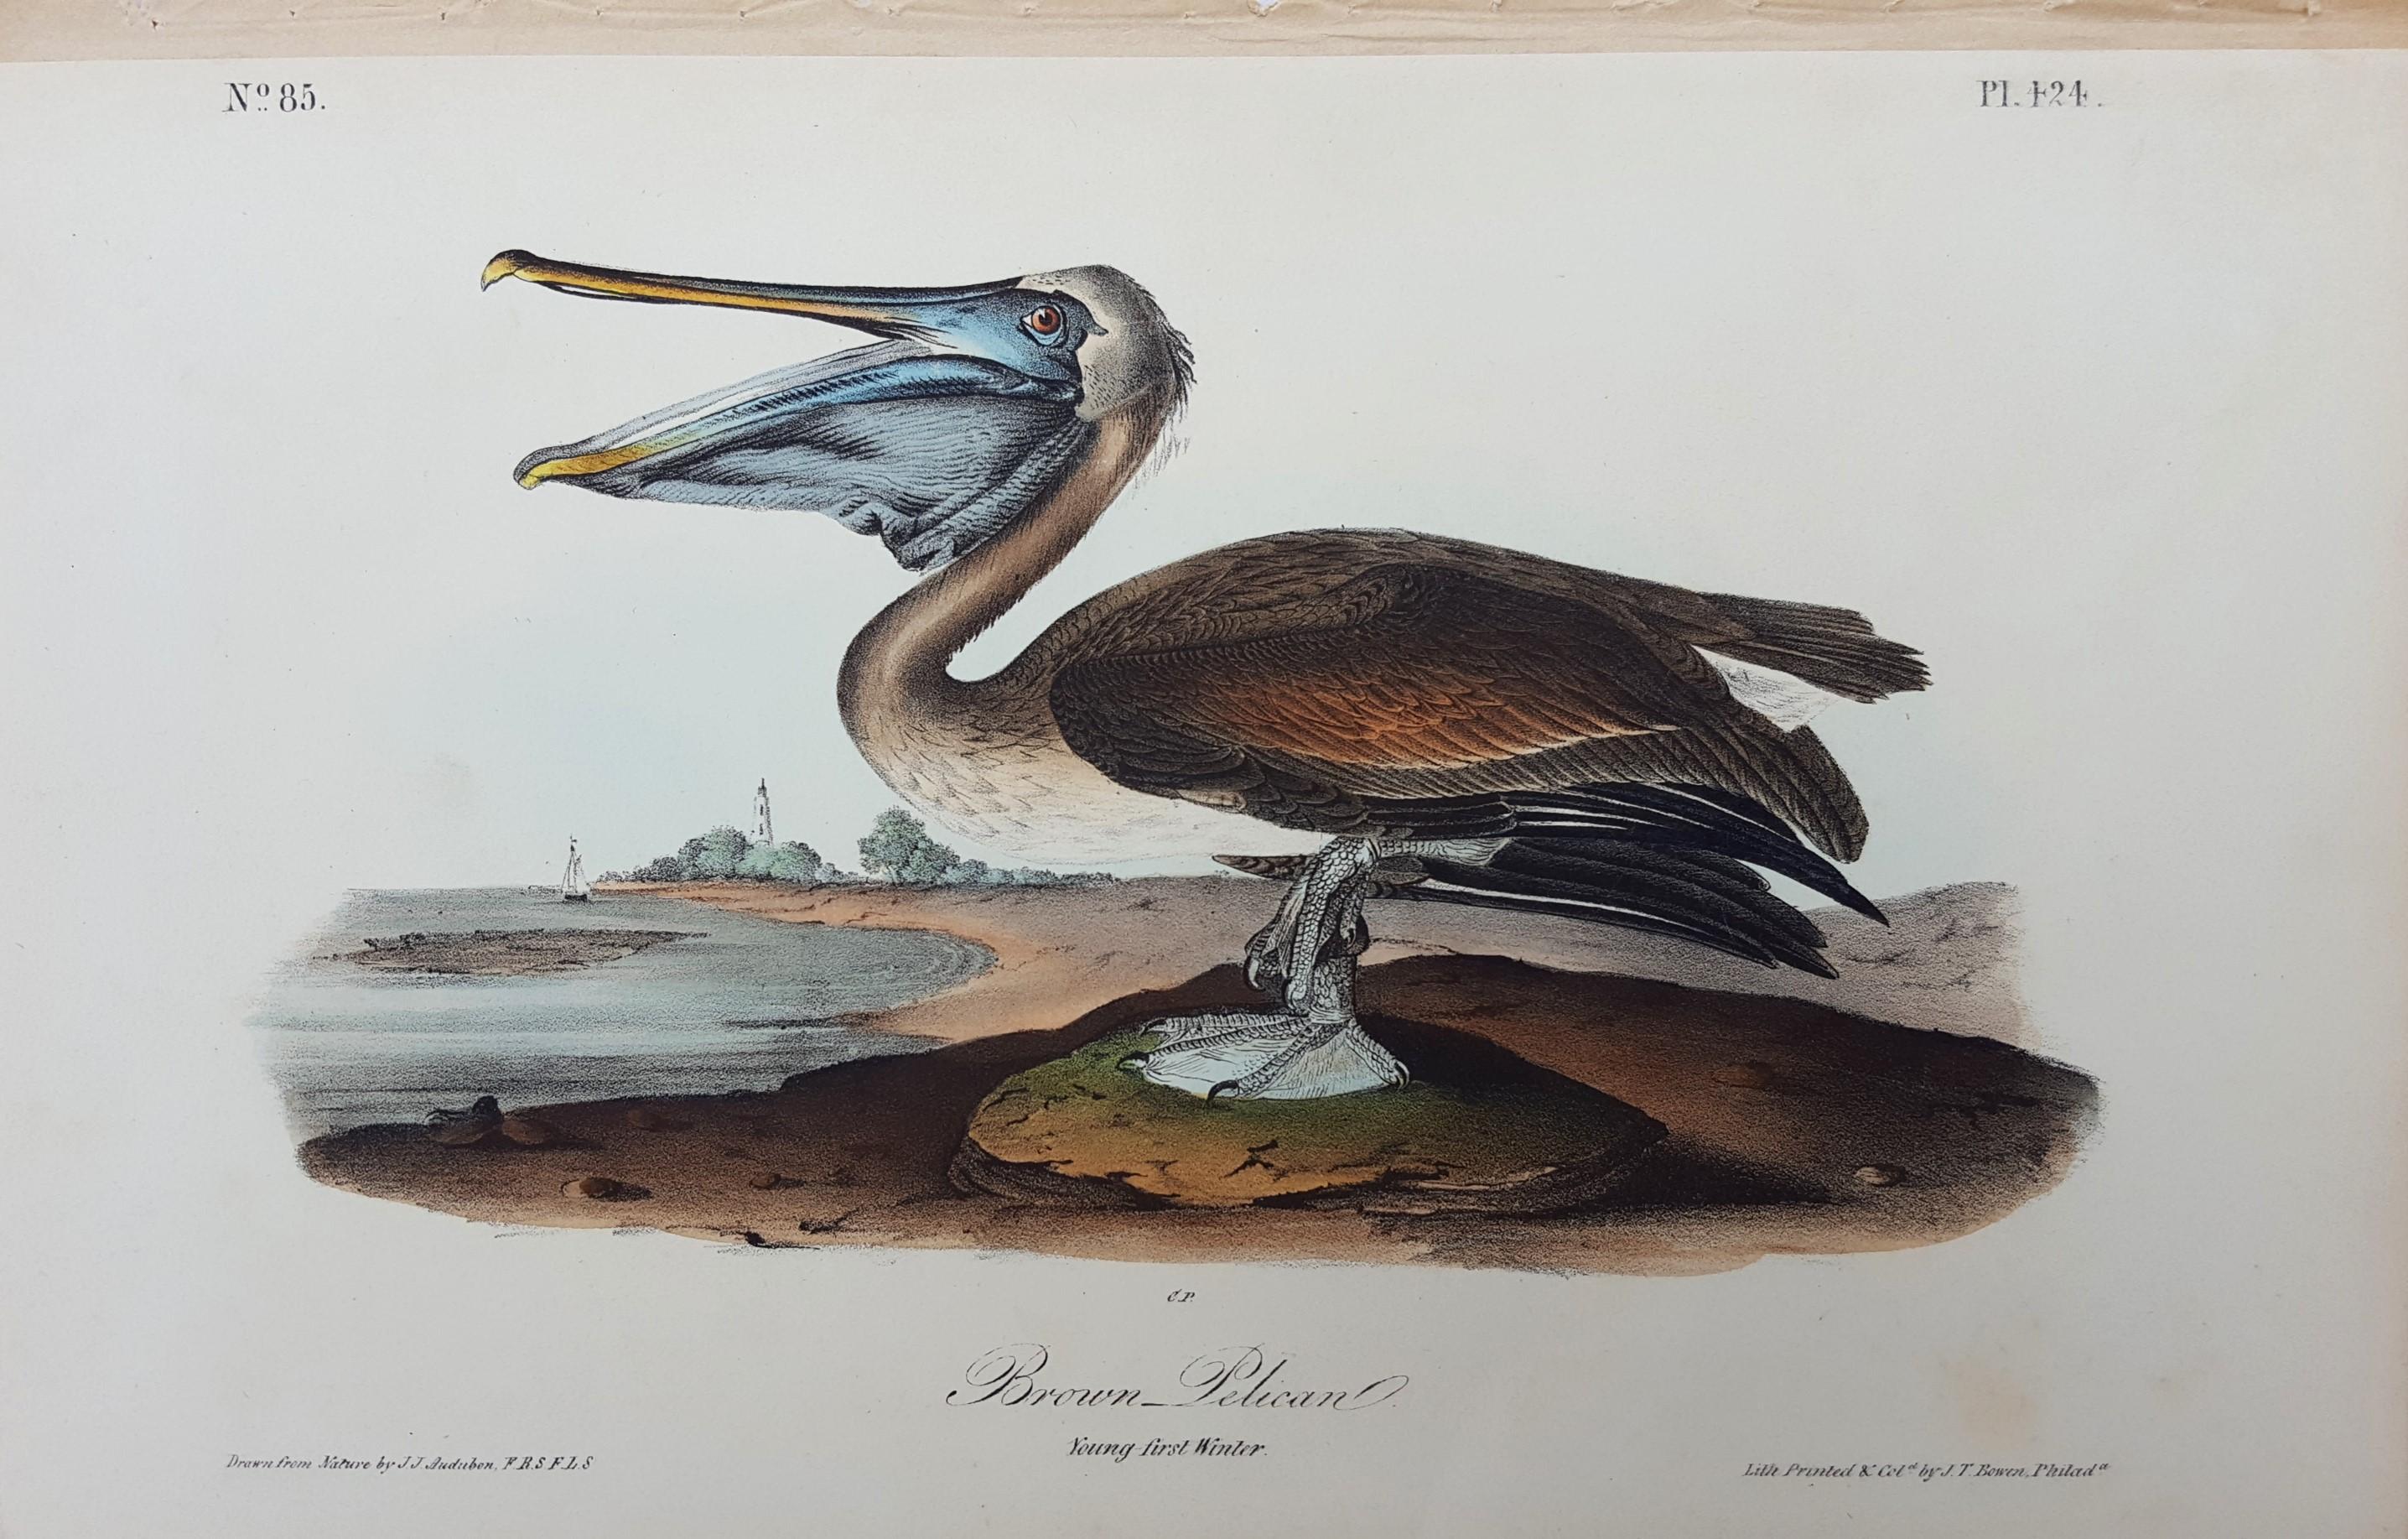 Artistics : John James Audubon (américain, 1785-1851)
Titre : 